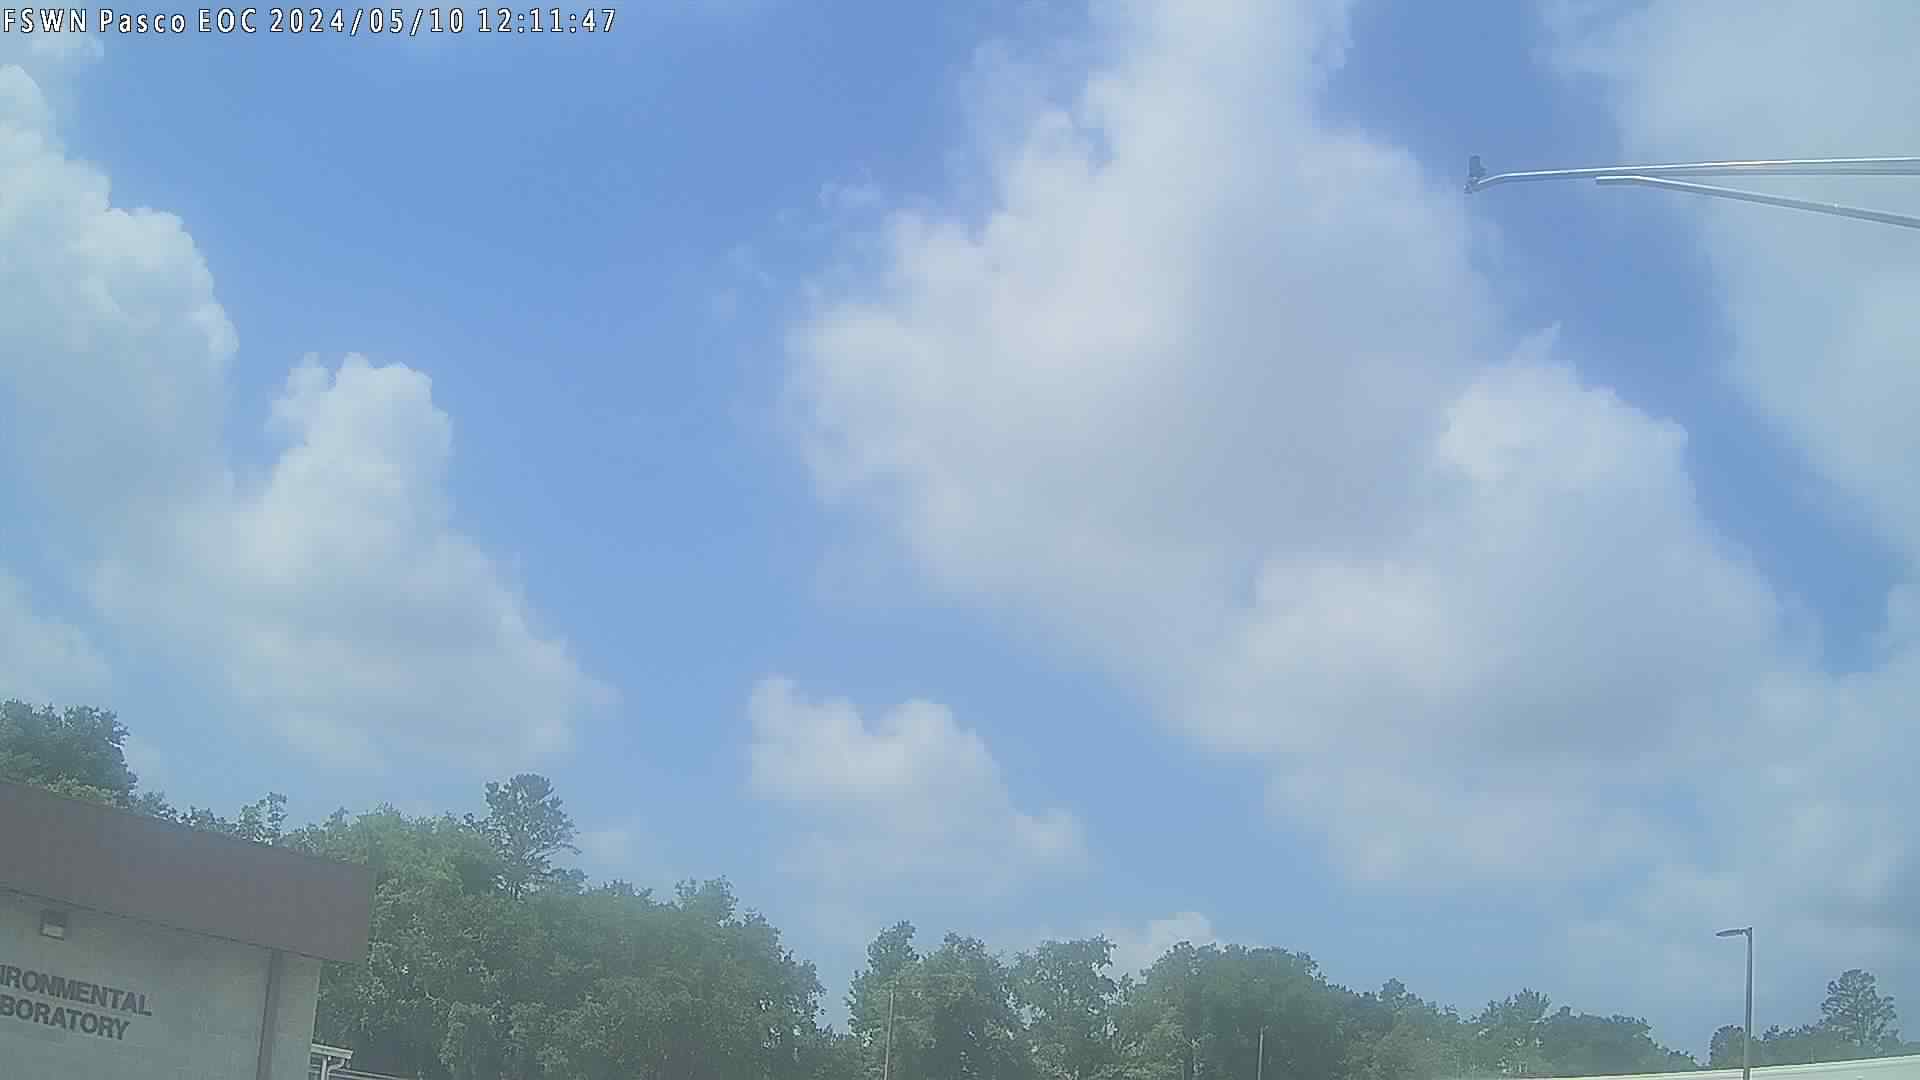  WeatherSTEM Cloud Camera FSWNPascoEOC in Pasco County, Florida FL at FSWN Pasco County EOC